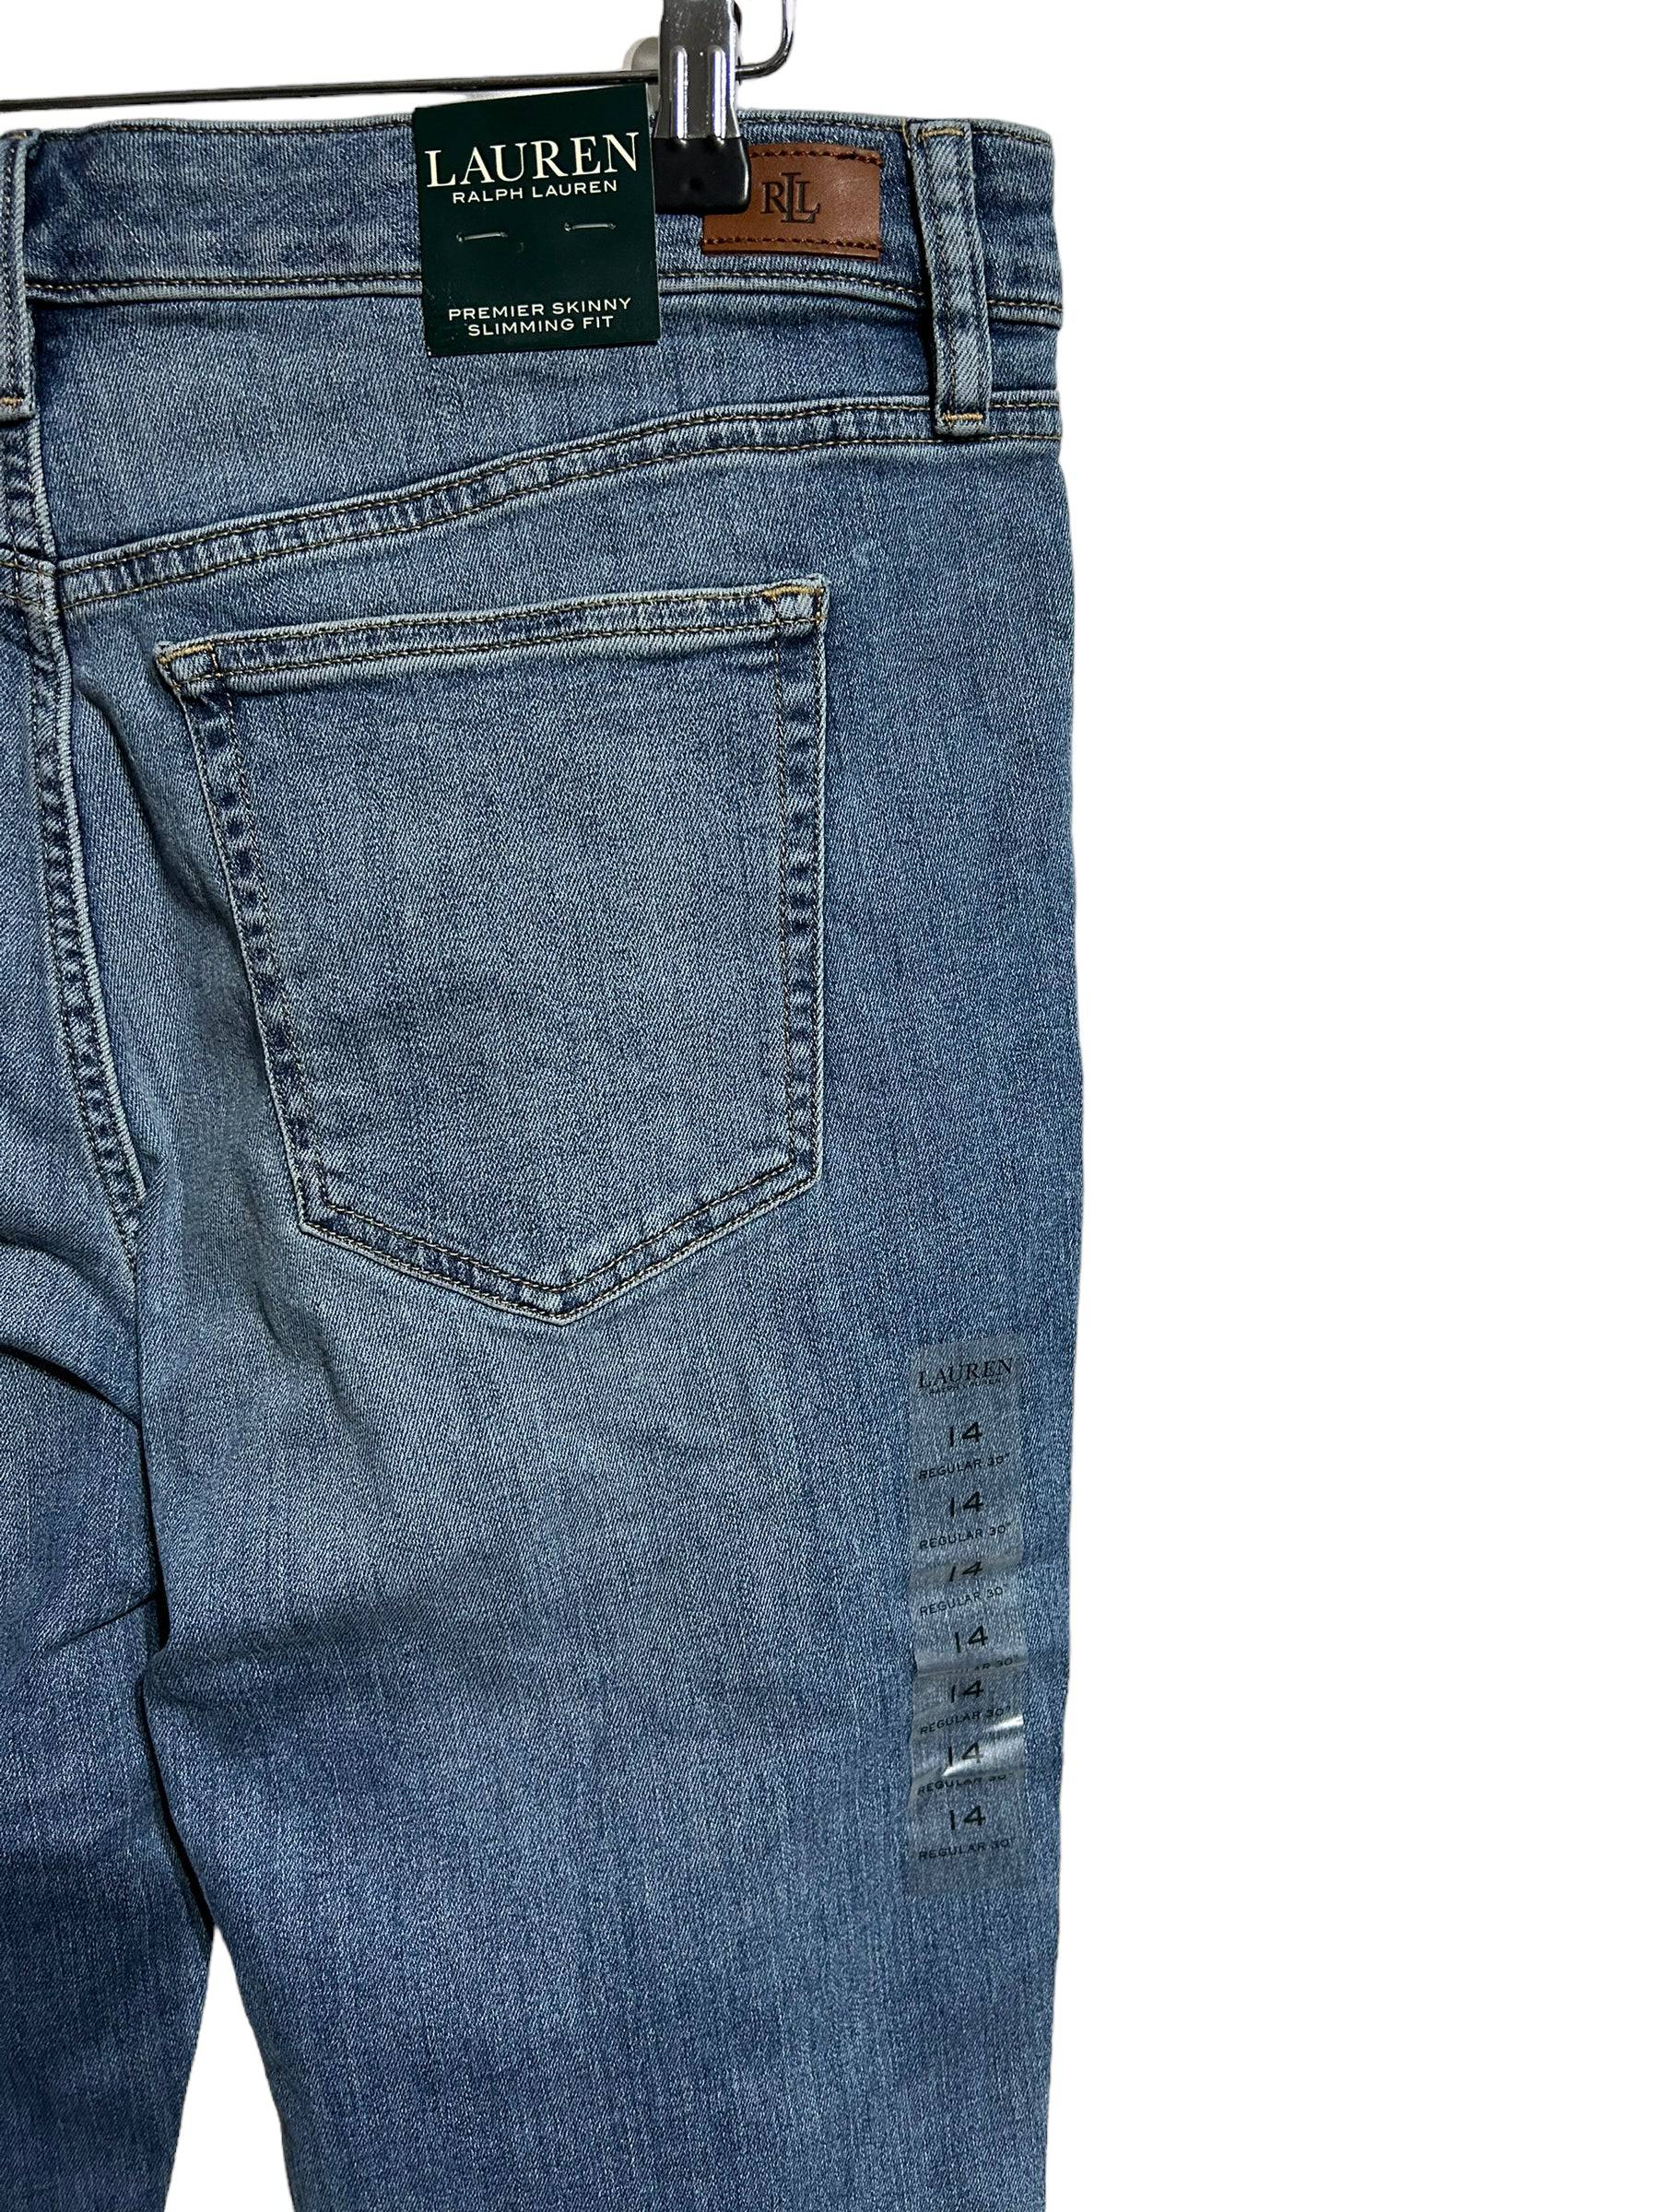 Lauren Ralph Lauren Premier Skinny Slimming Fit Jeans - Recurring.Life